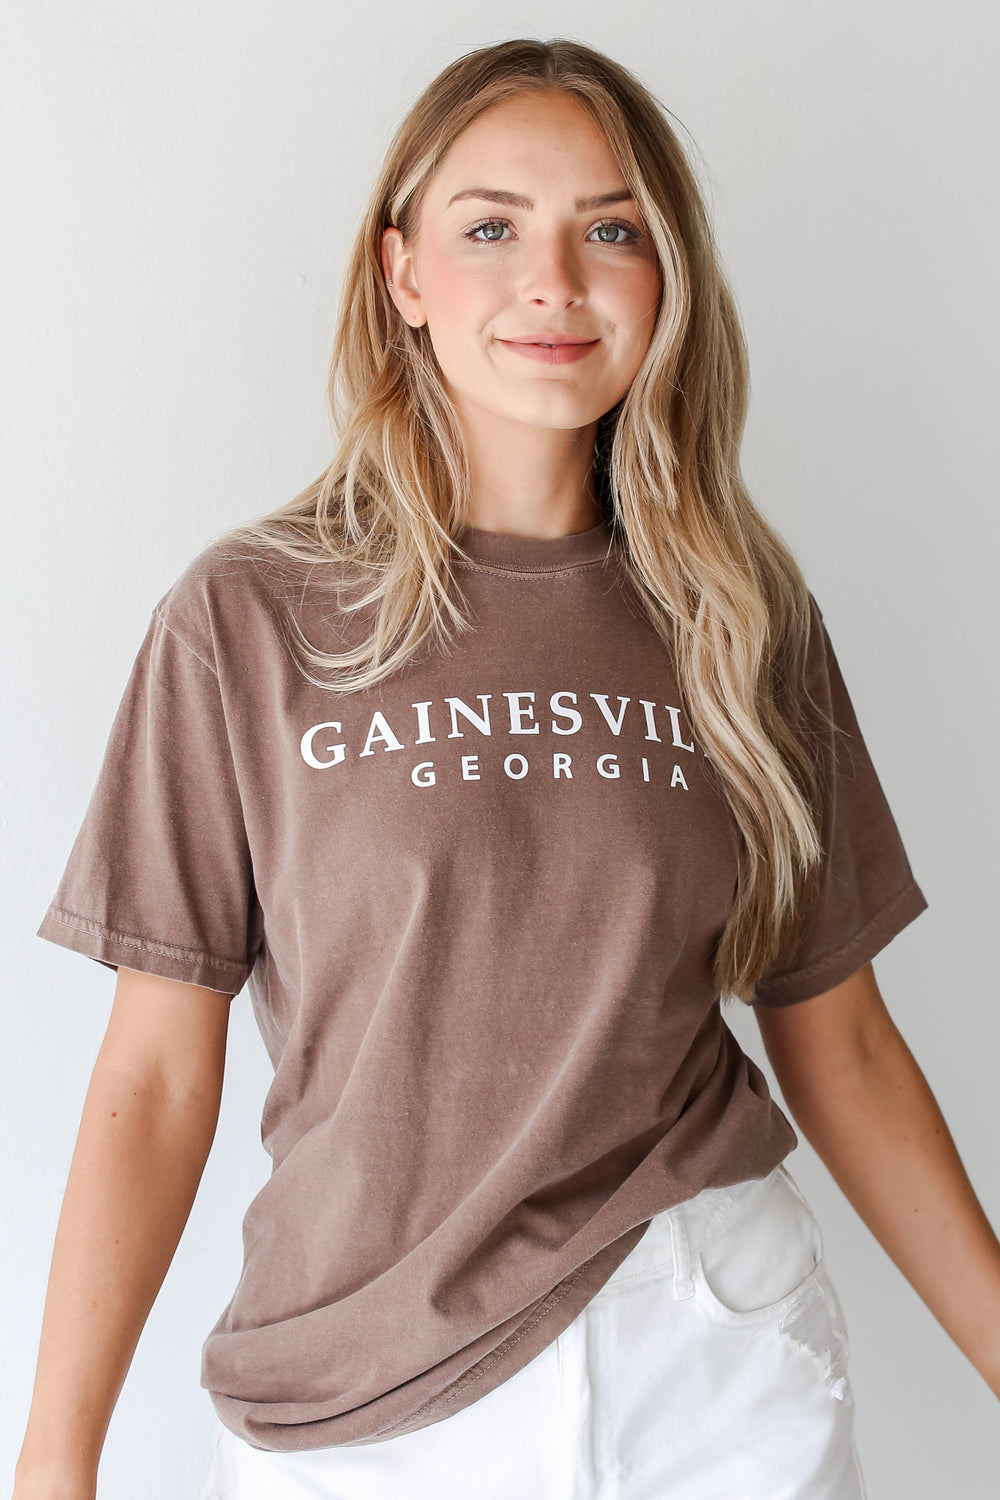 Brown Gainesville Georgia Tee on model